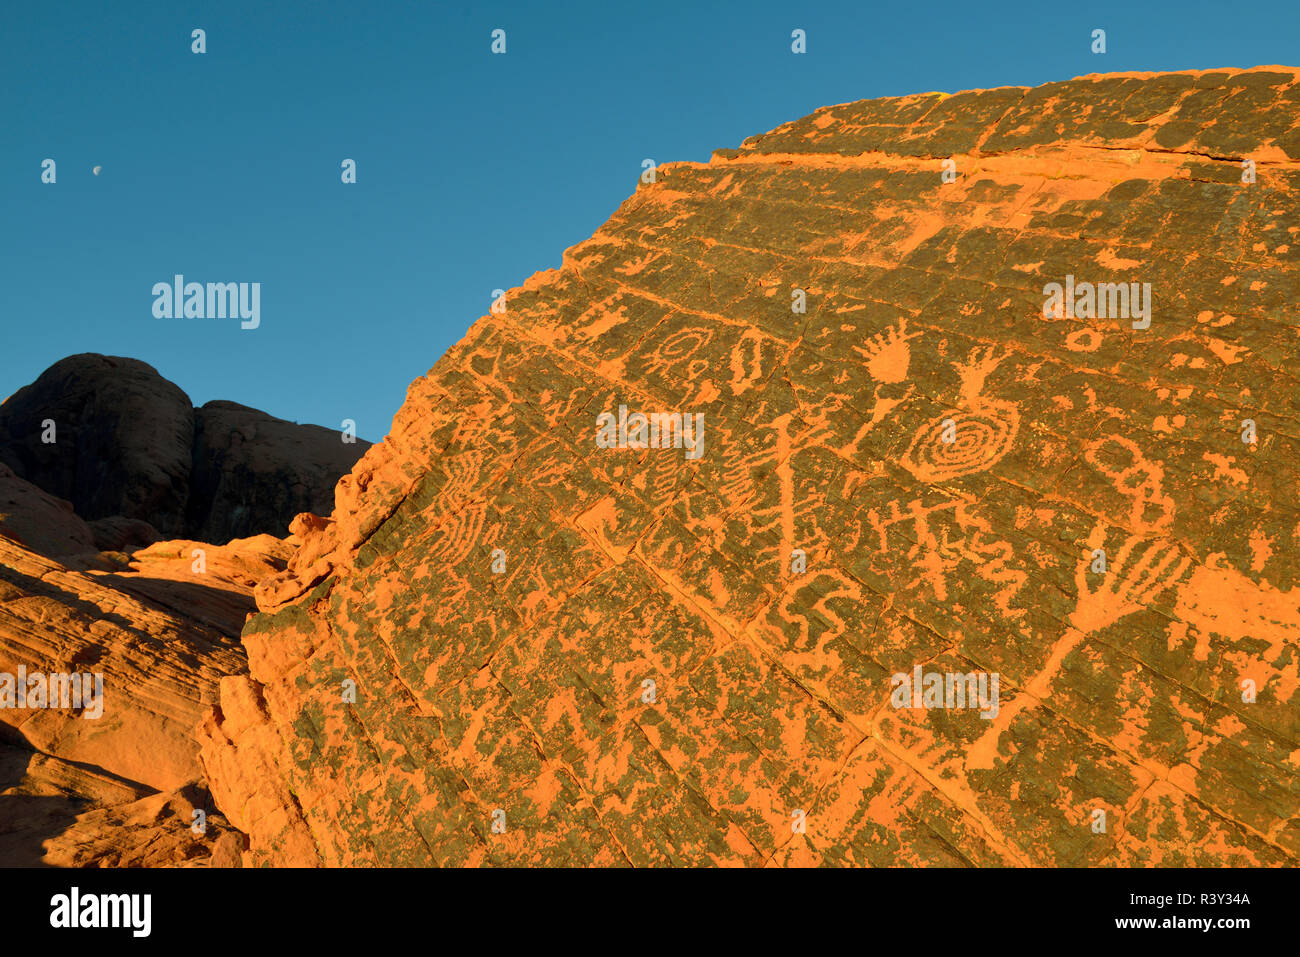 USA, Nevada. Vallée de Feu, des pétroglyphes du parc près de l'Atlatl Rock Banque D'Images